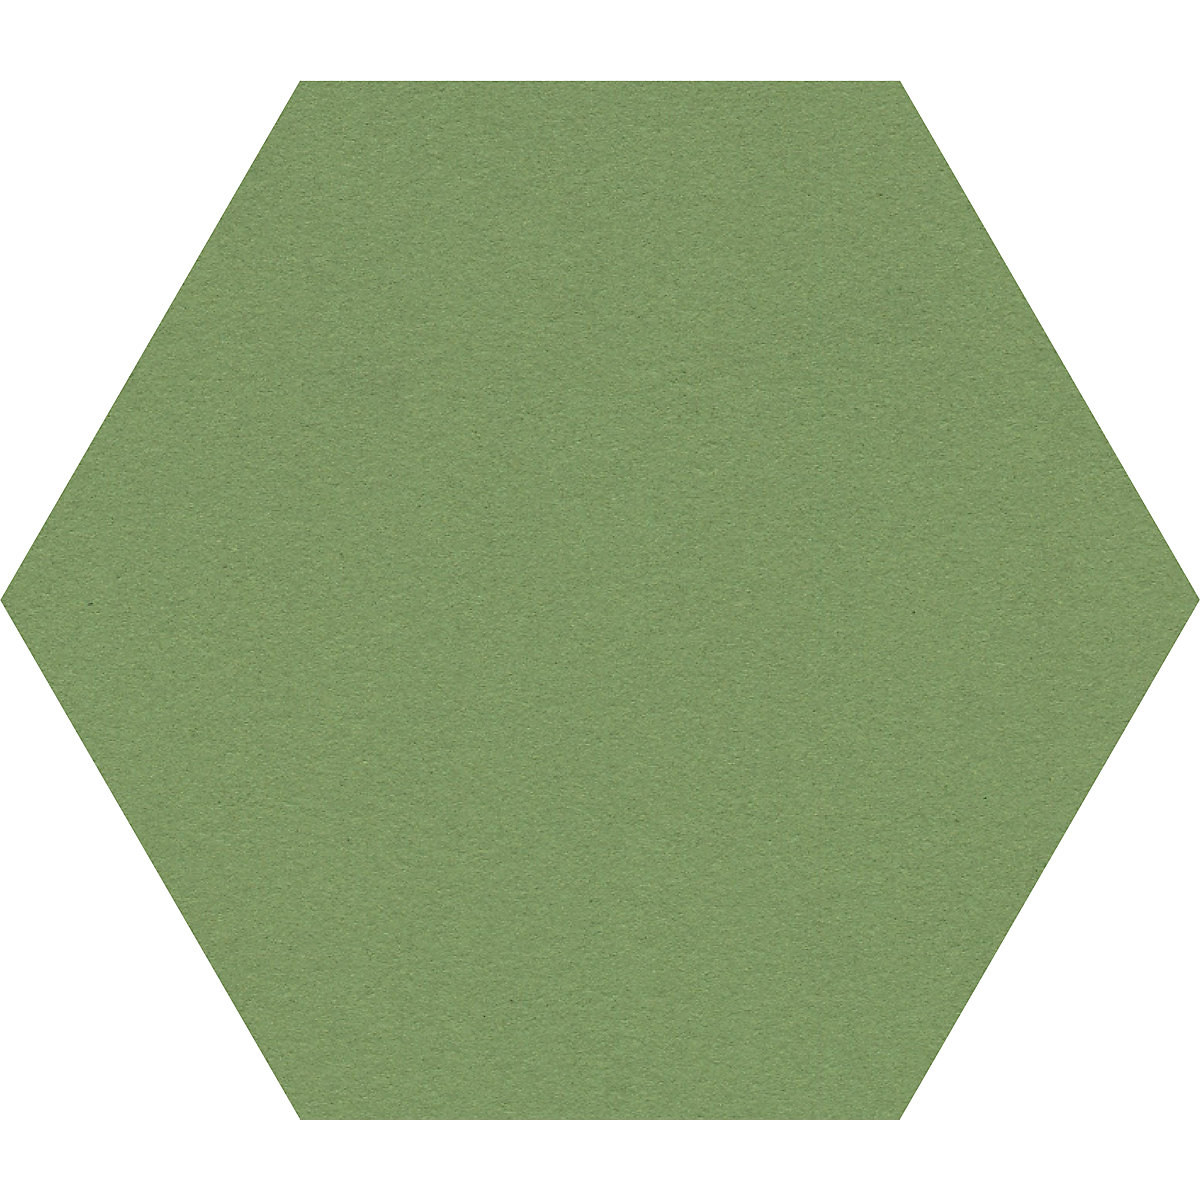 Tableau à épingles design hexagonal – Chameleon, liège, l x h 600 x 600 mm, vert-33